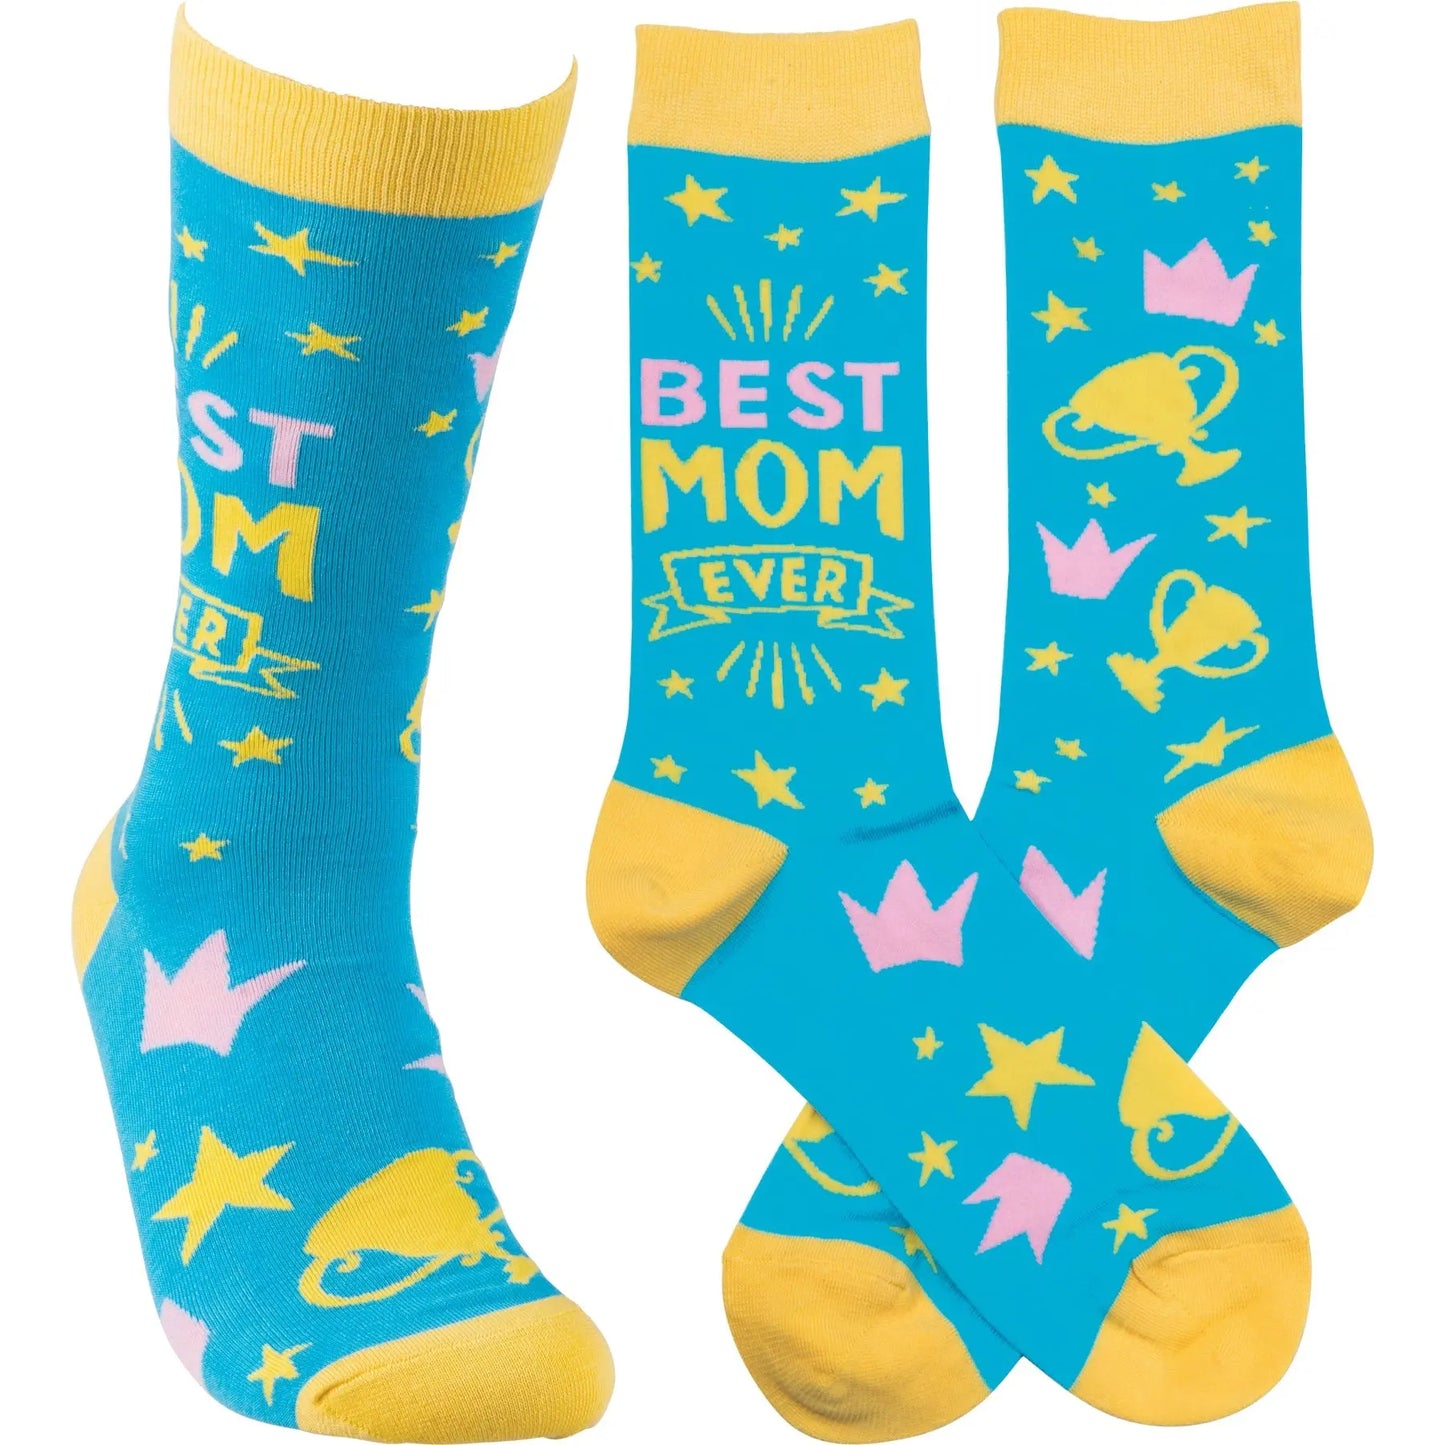 Primitives By Kathy - "Best Mom" Socks PRIMITIVES BY KATHY